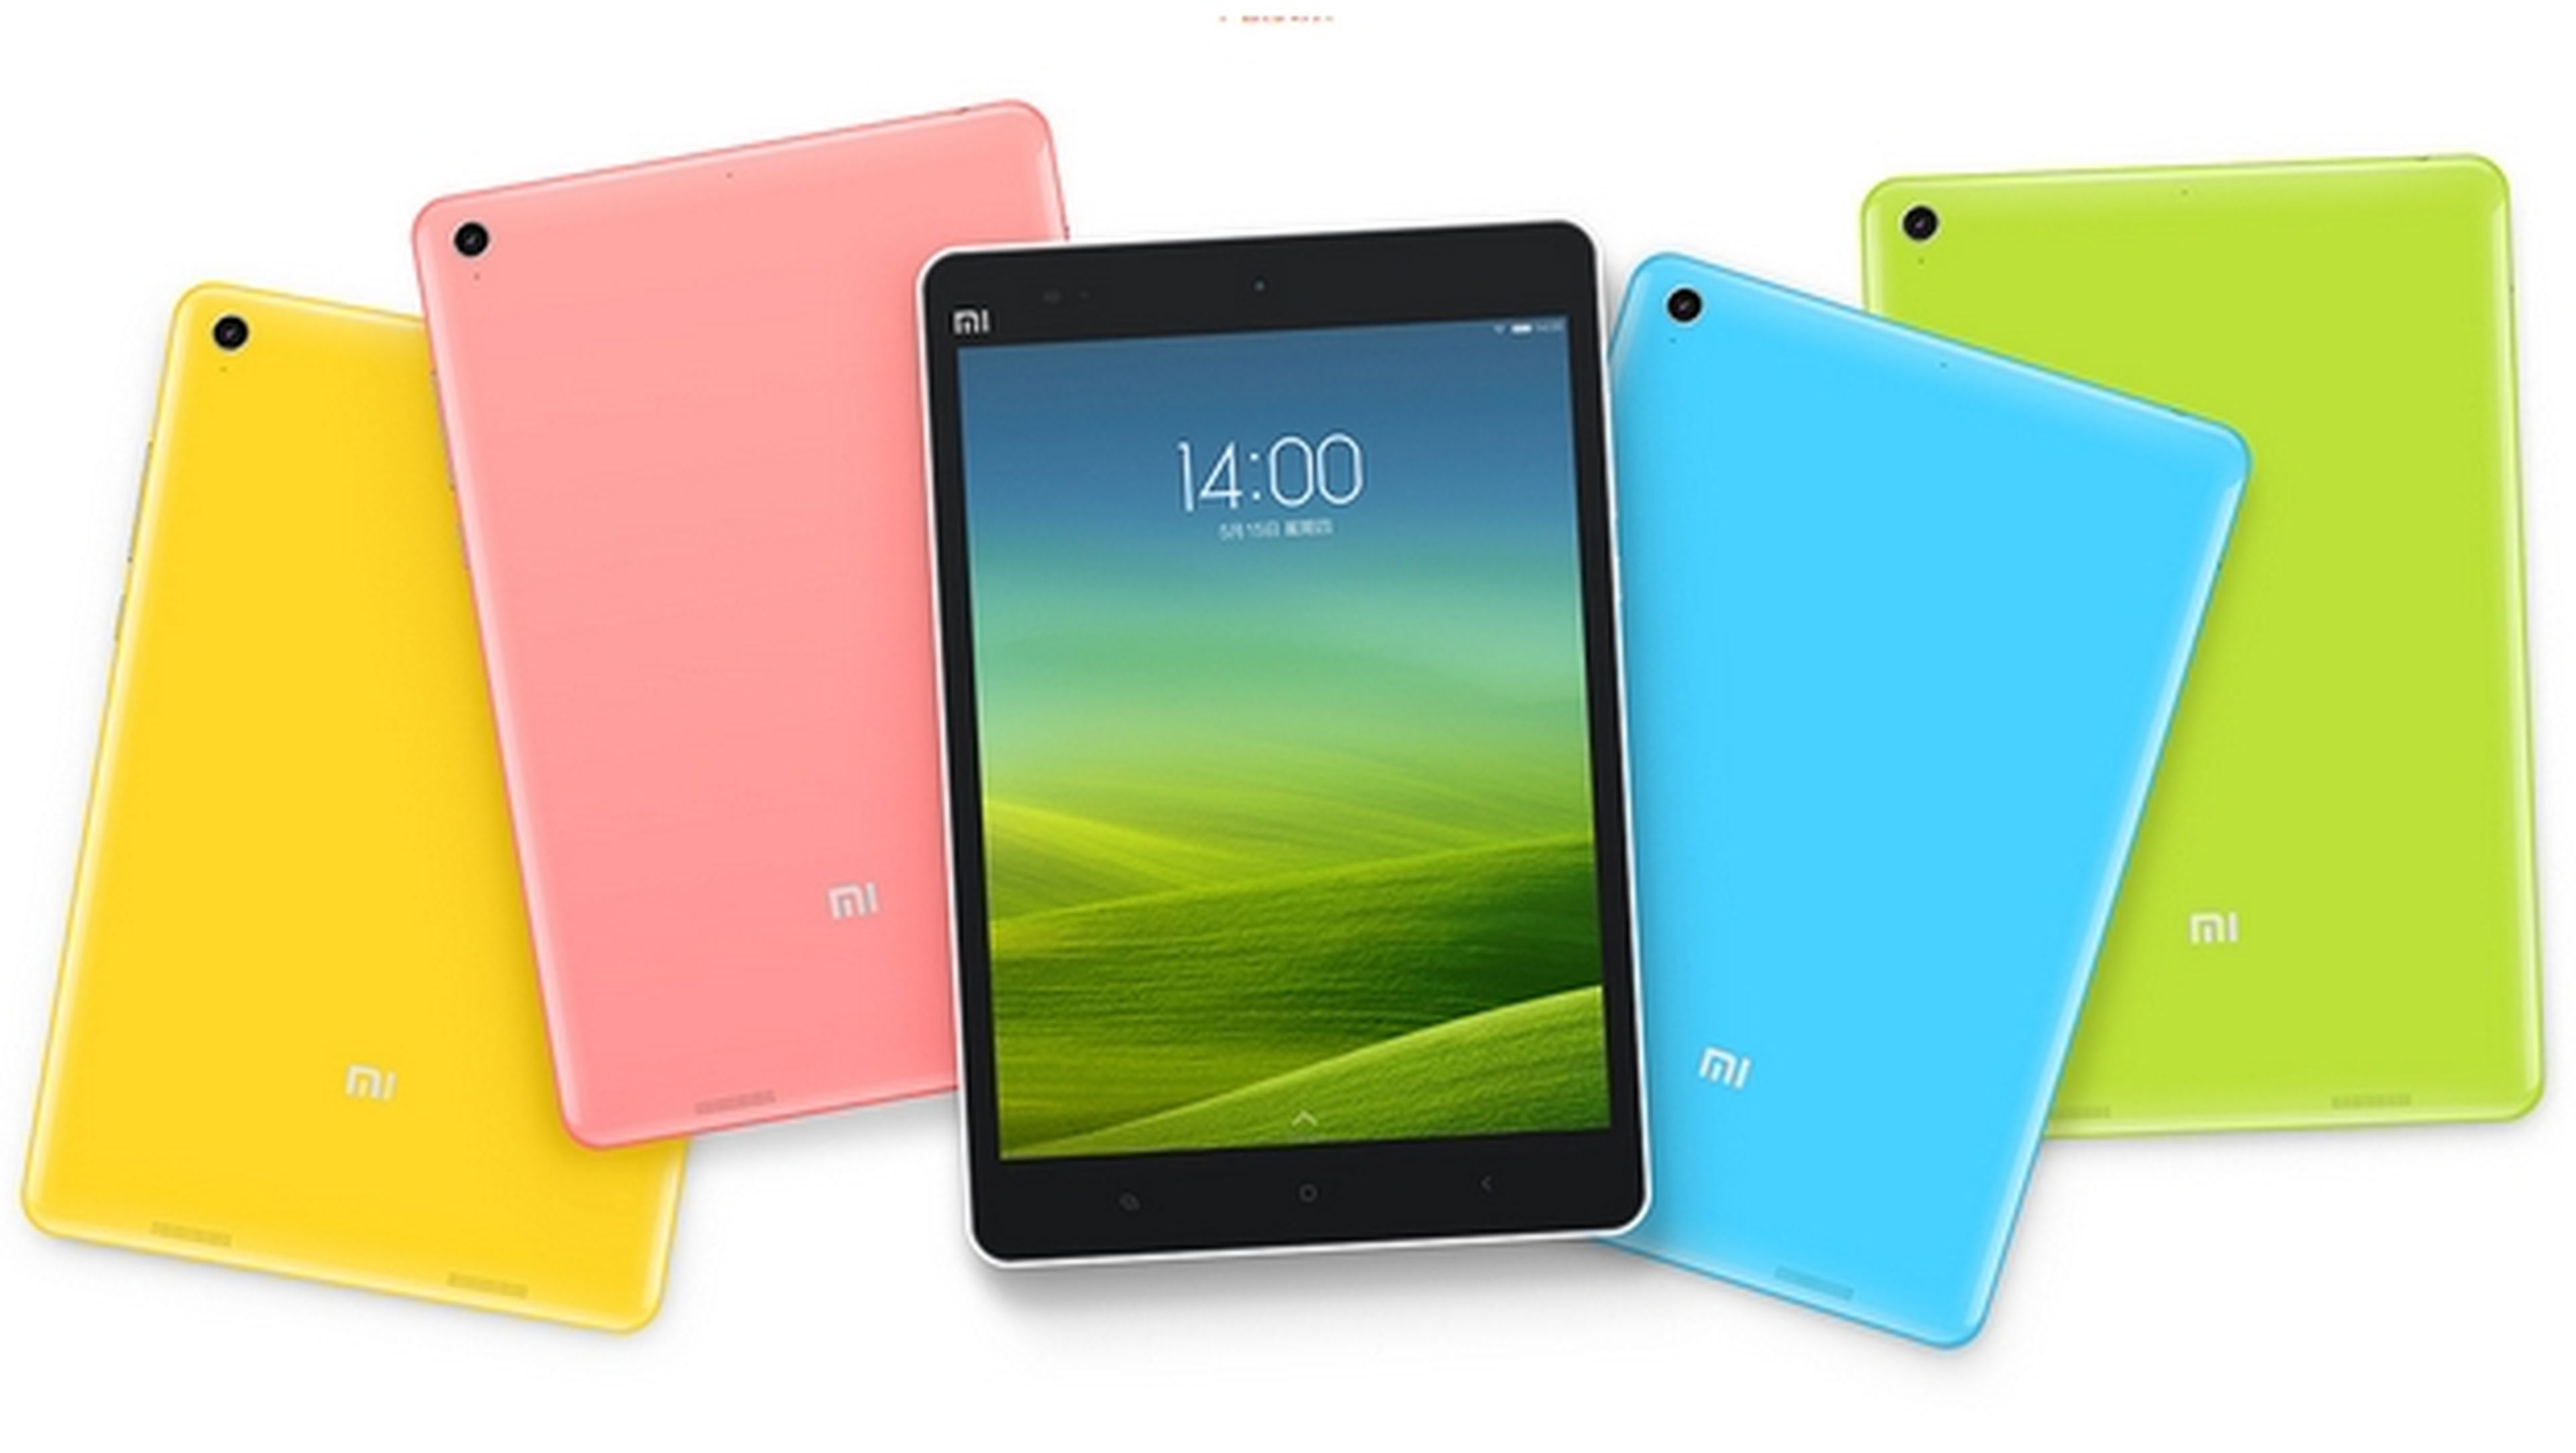 La nueva tablet Xiaomi Mi Pad, un clon del iPad Mini con pantalla Retina y procesador NVIDIA Tegra K1